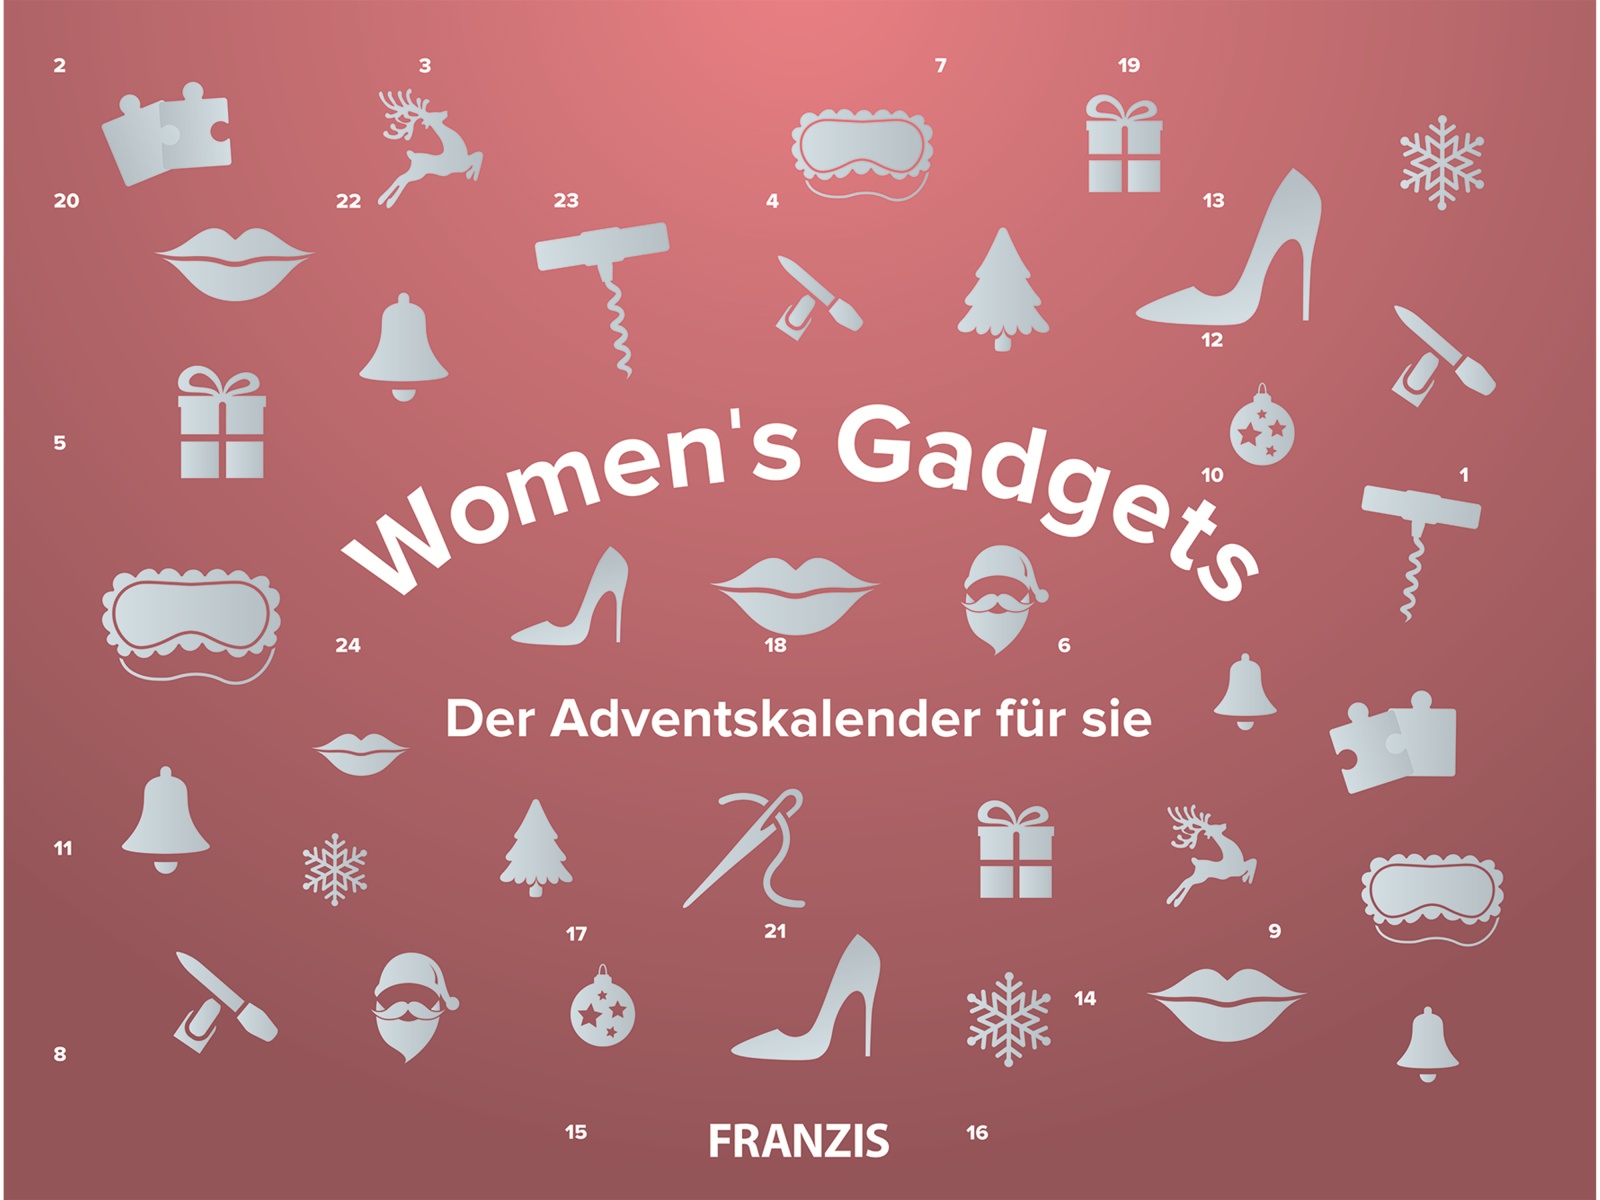 FRANZIS Adventskalender, 67181, Women's Gadgets 